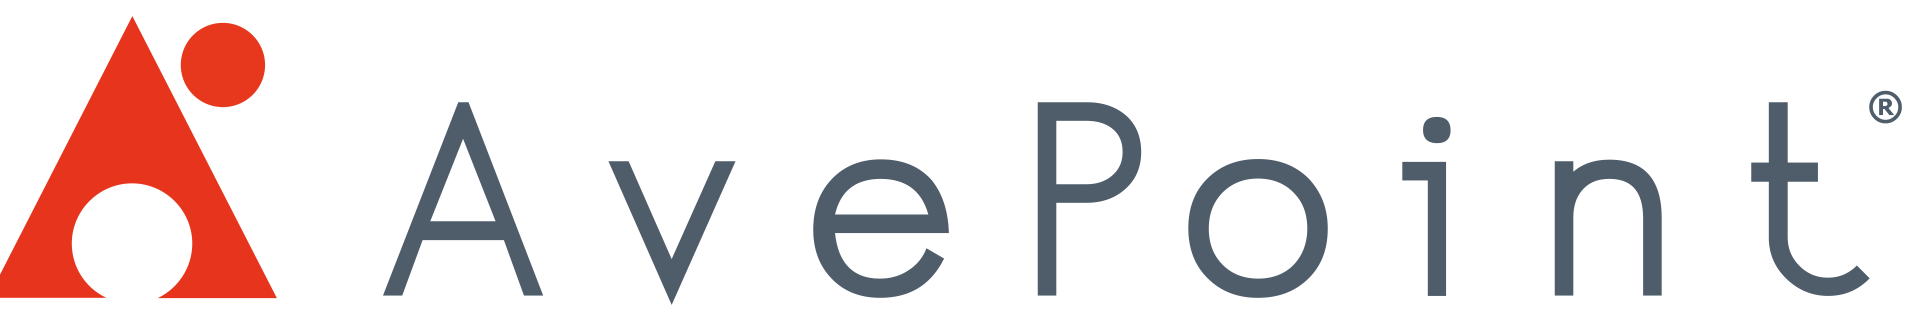 AvePoint - logo